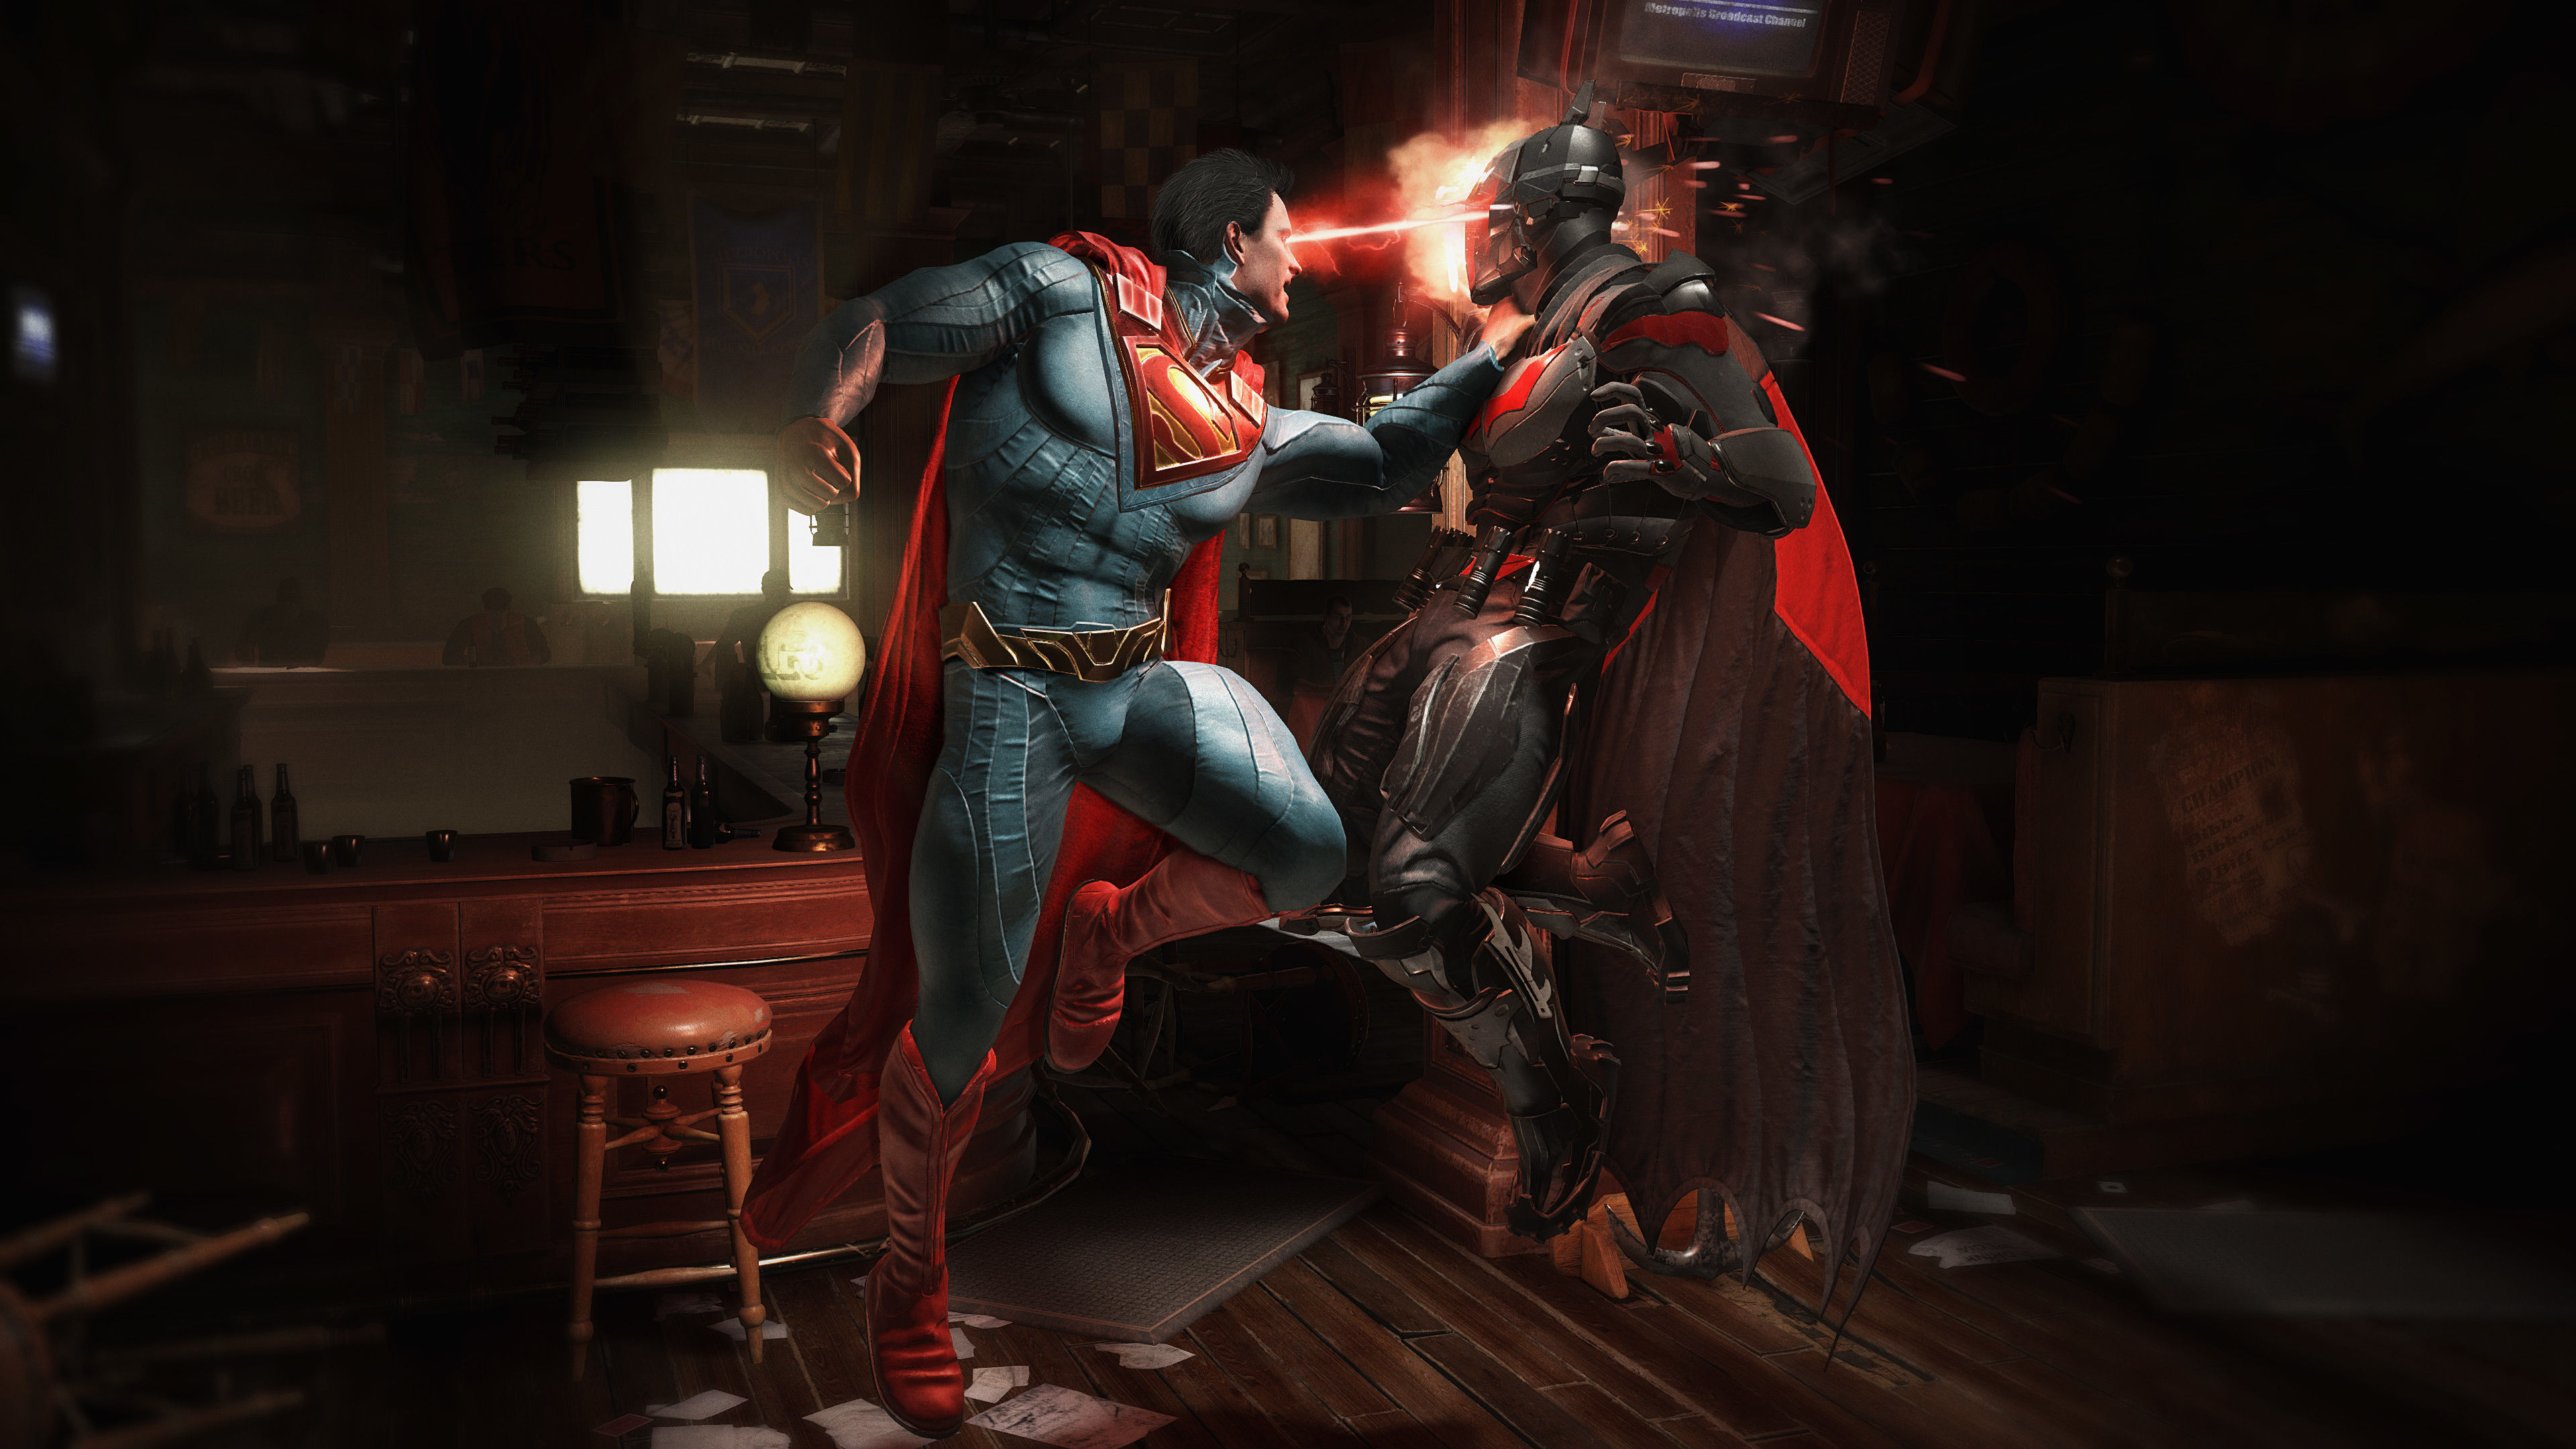 injustice 2, injustice, video game, superman